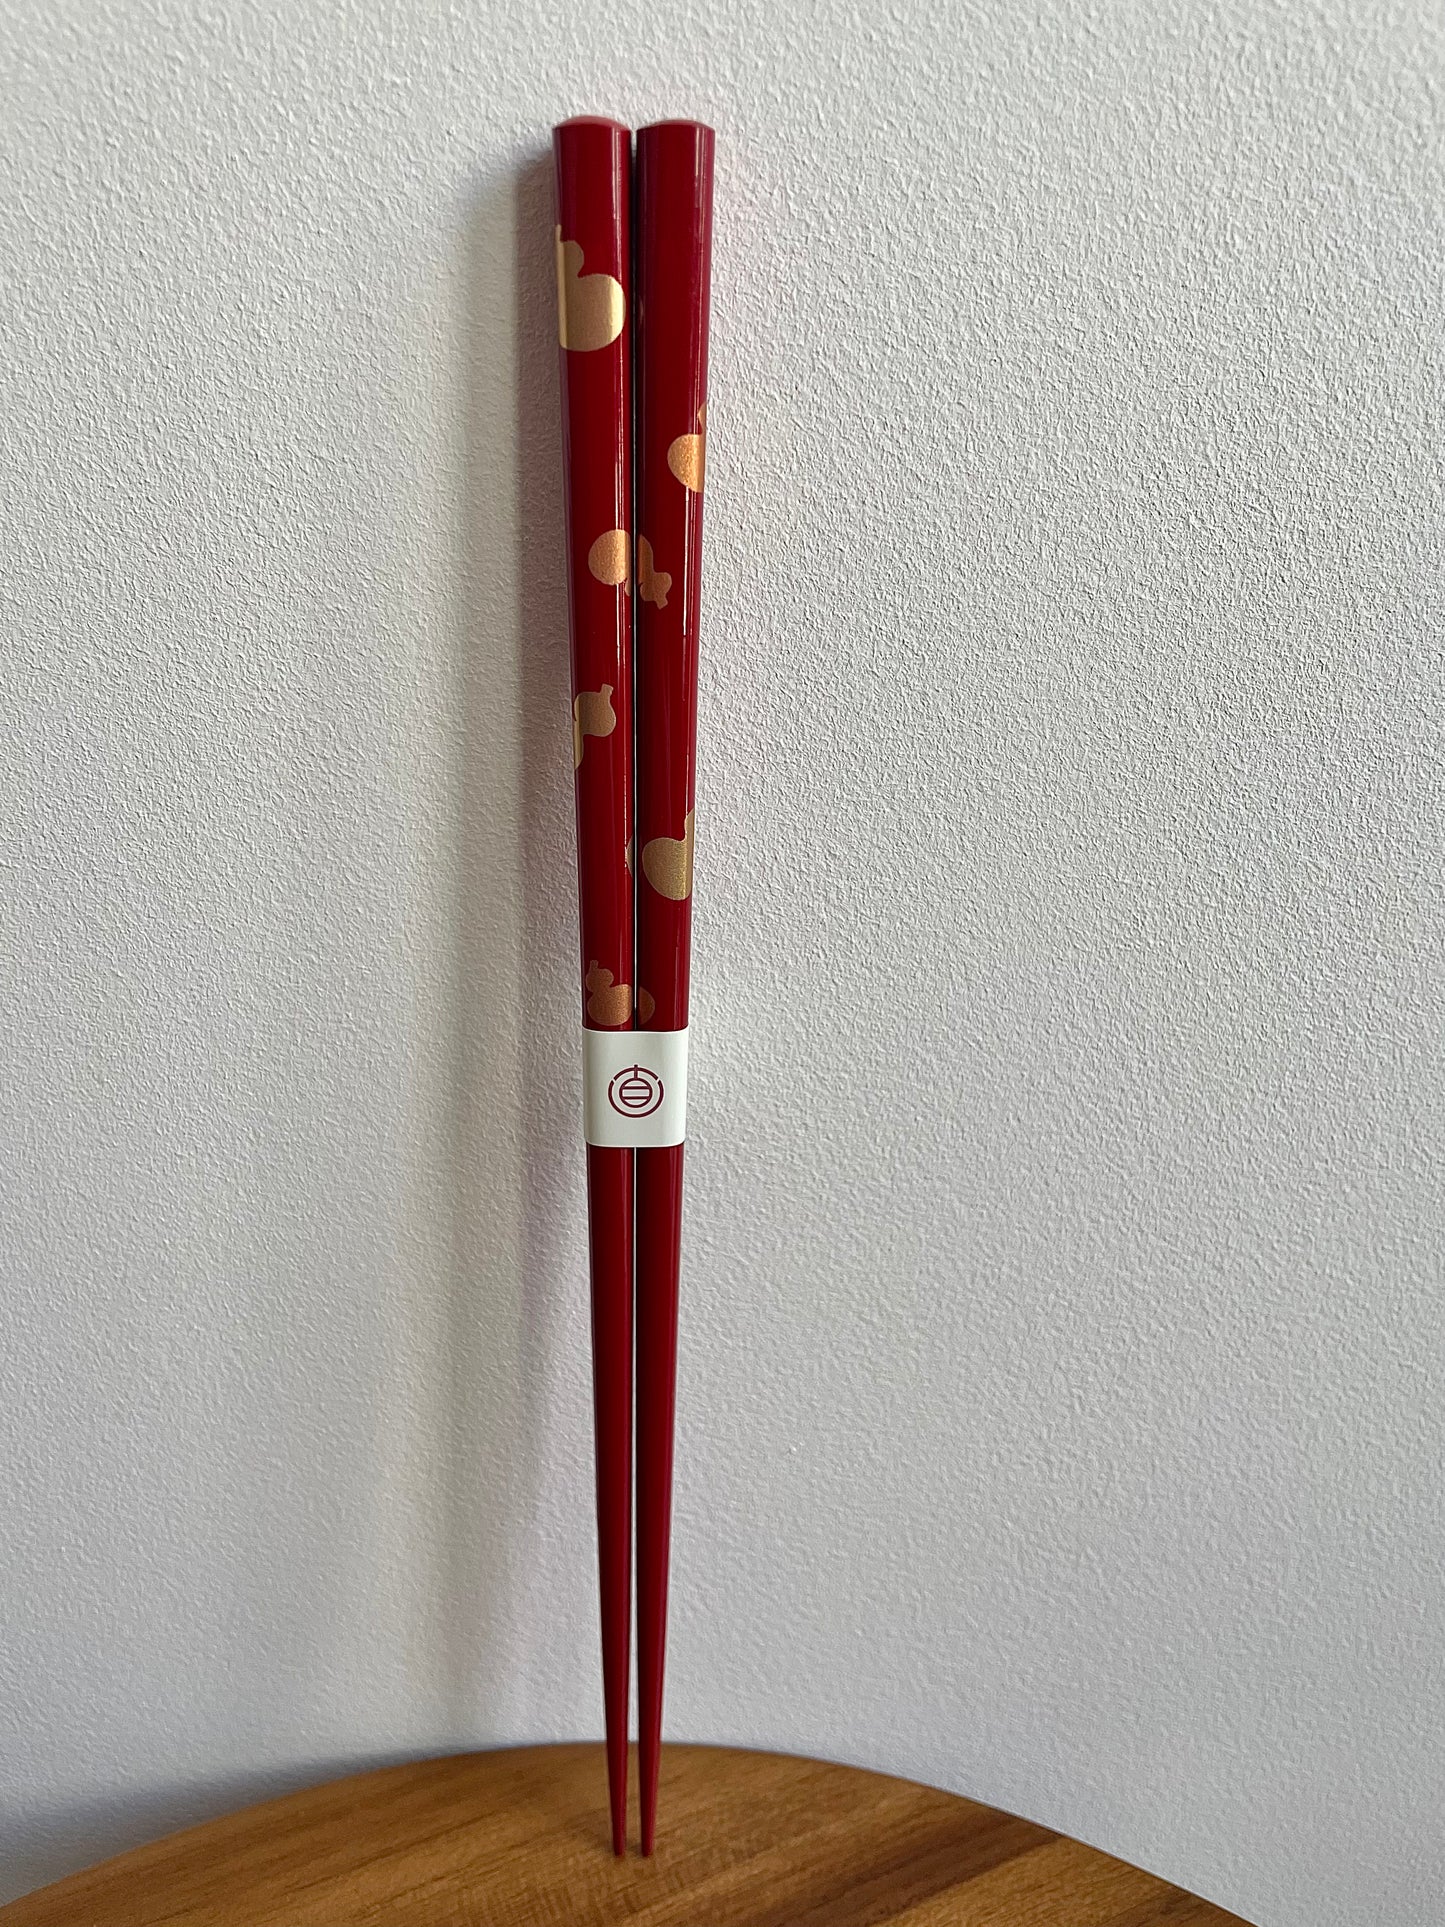 Tsuchinao Red Chopsticks